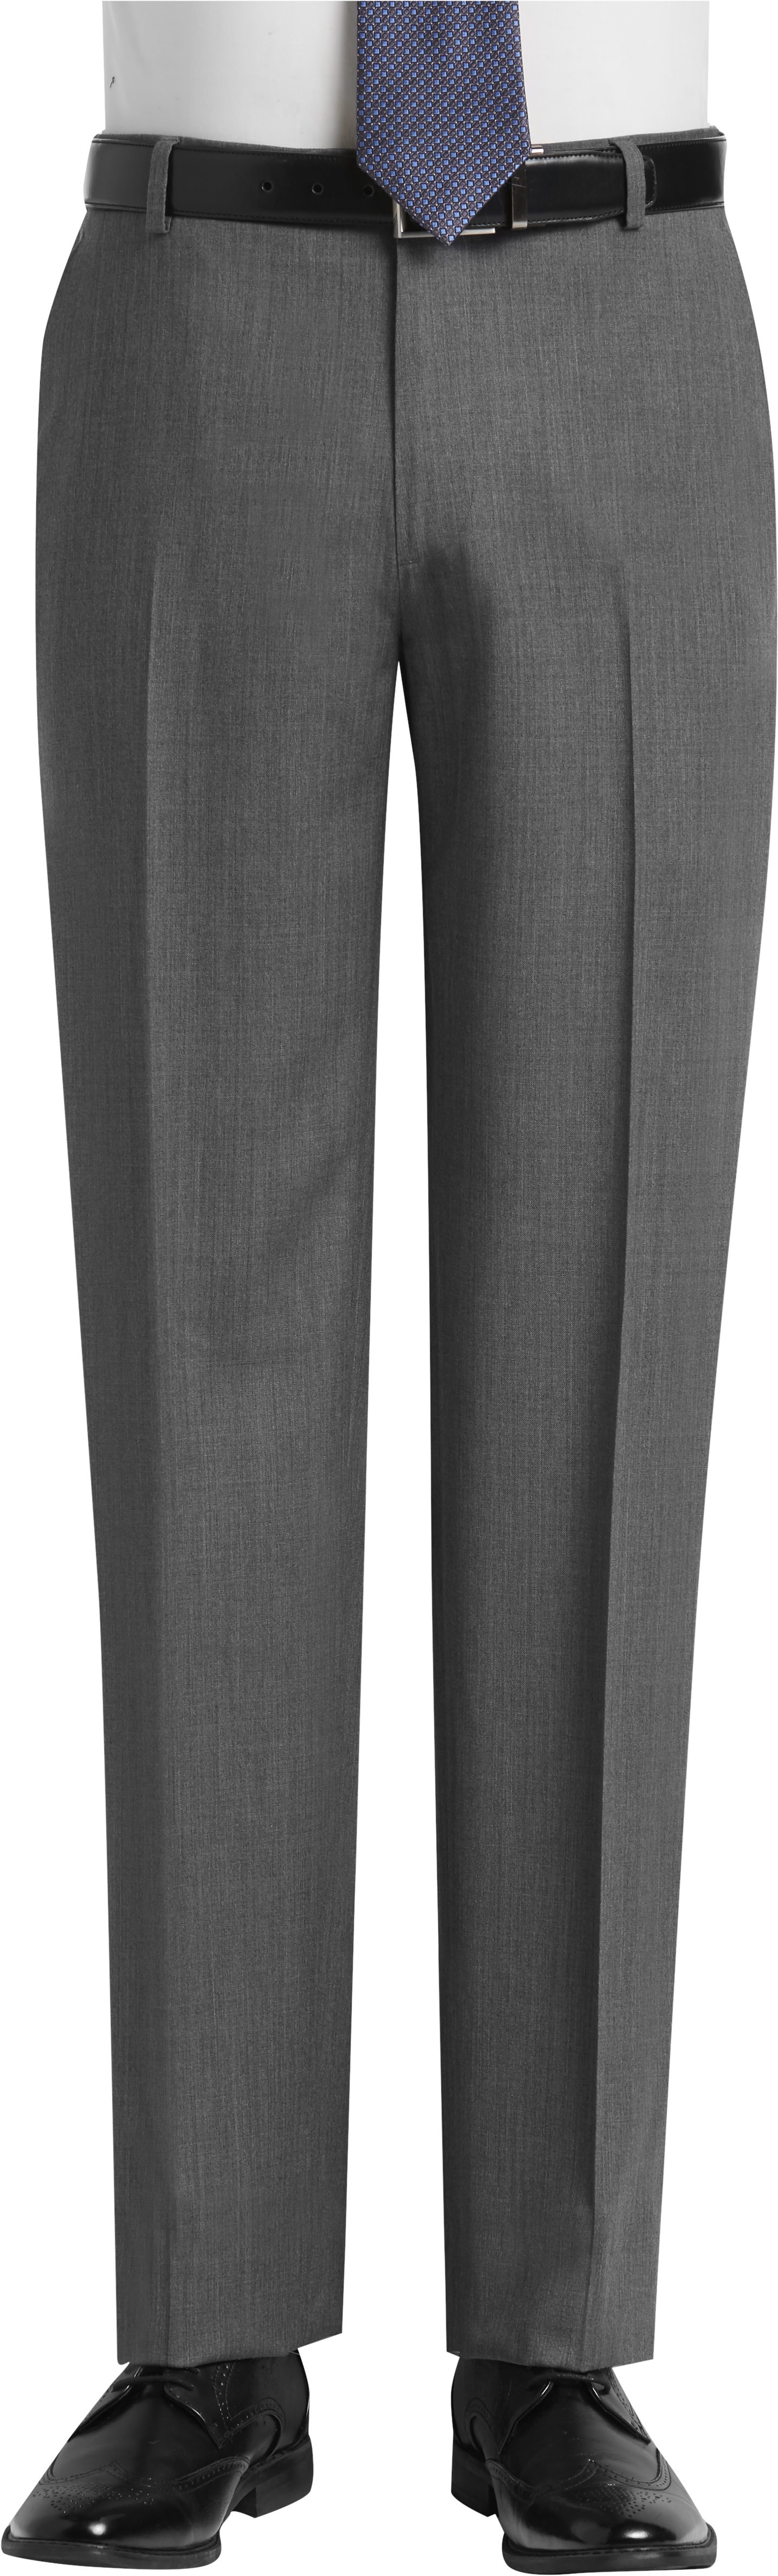 JOE Joseph Abboud Light Gray Modern Fit Dress Pants - Men's Sale | Men ...